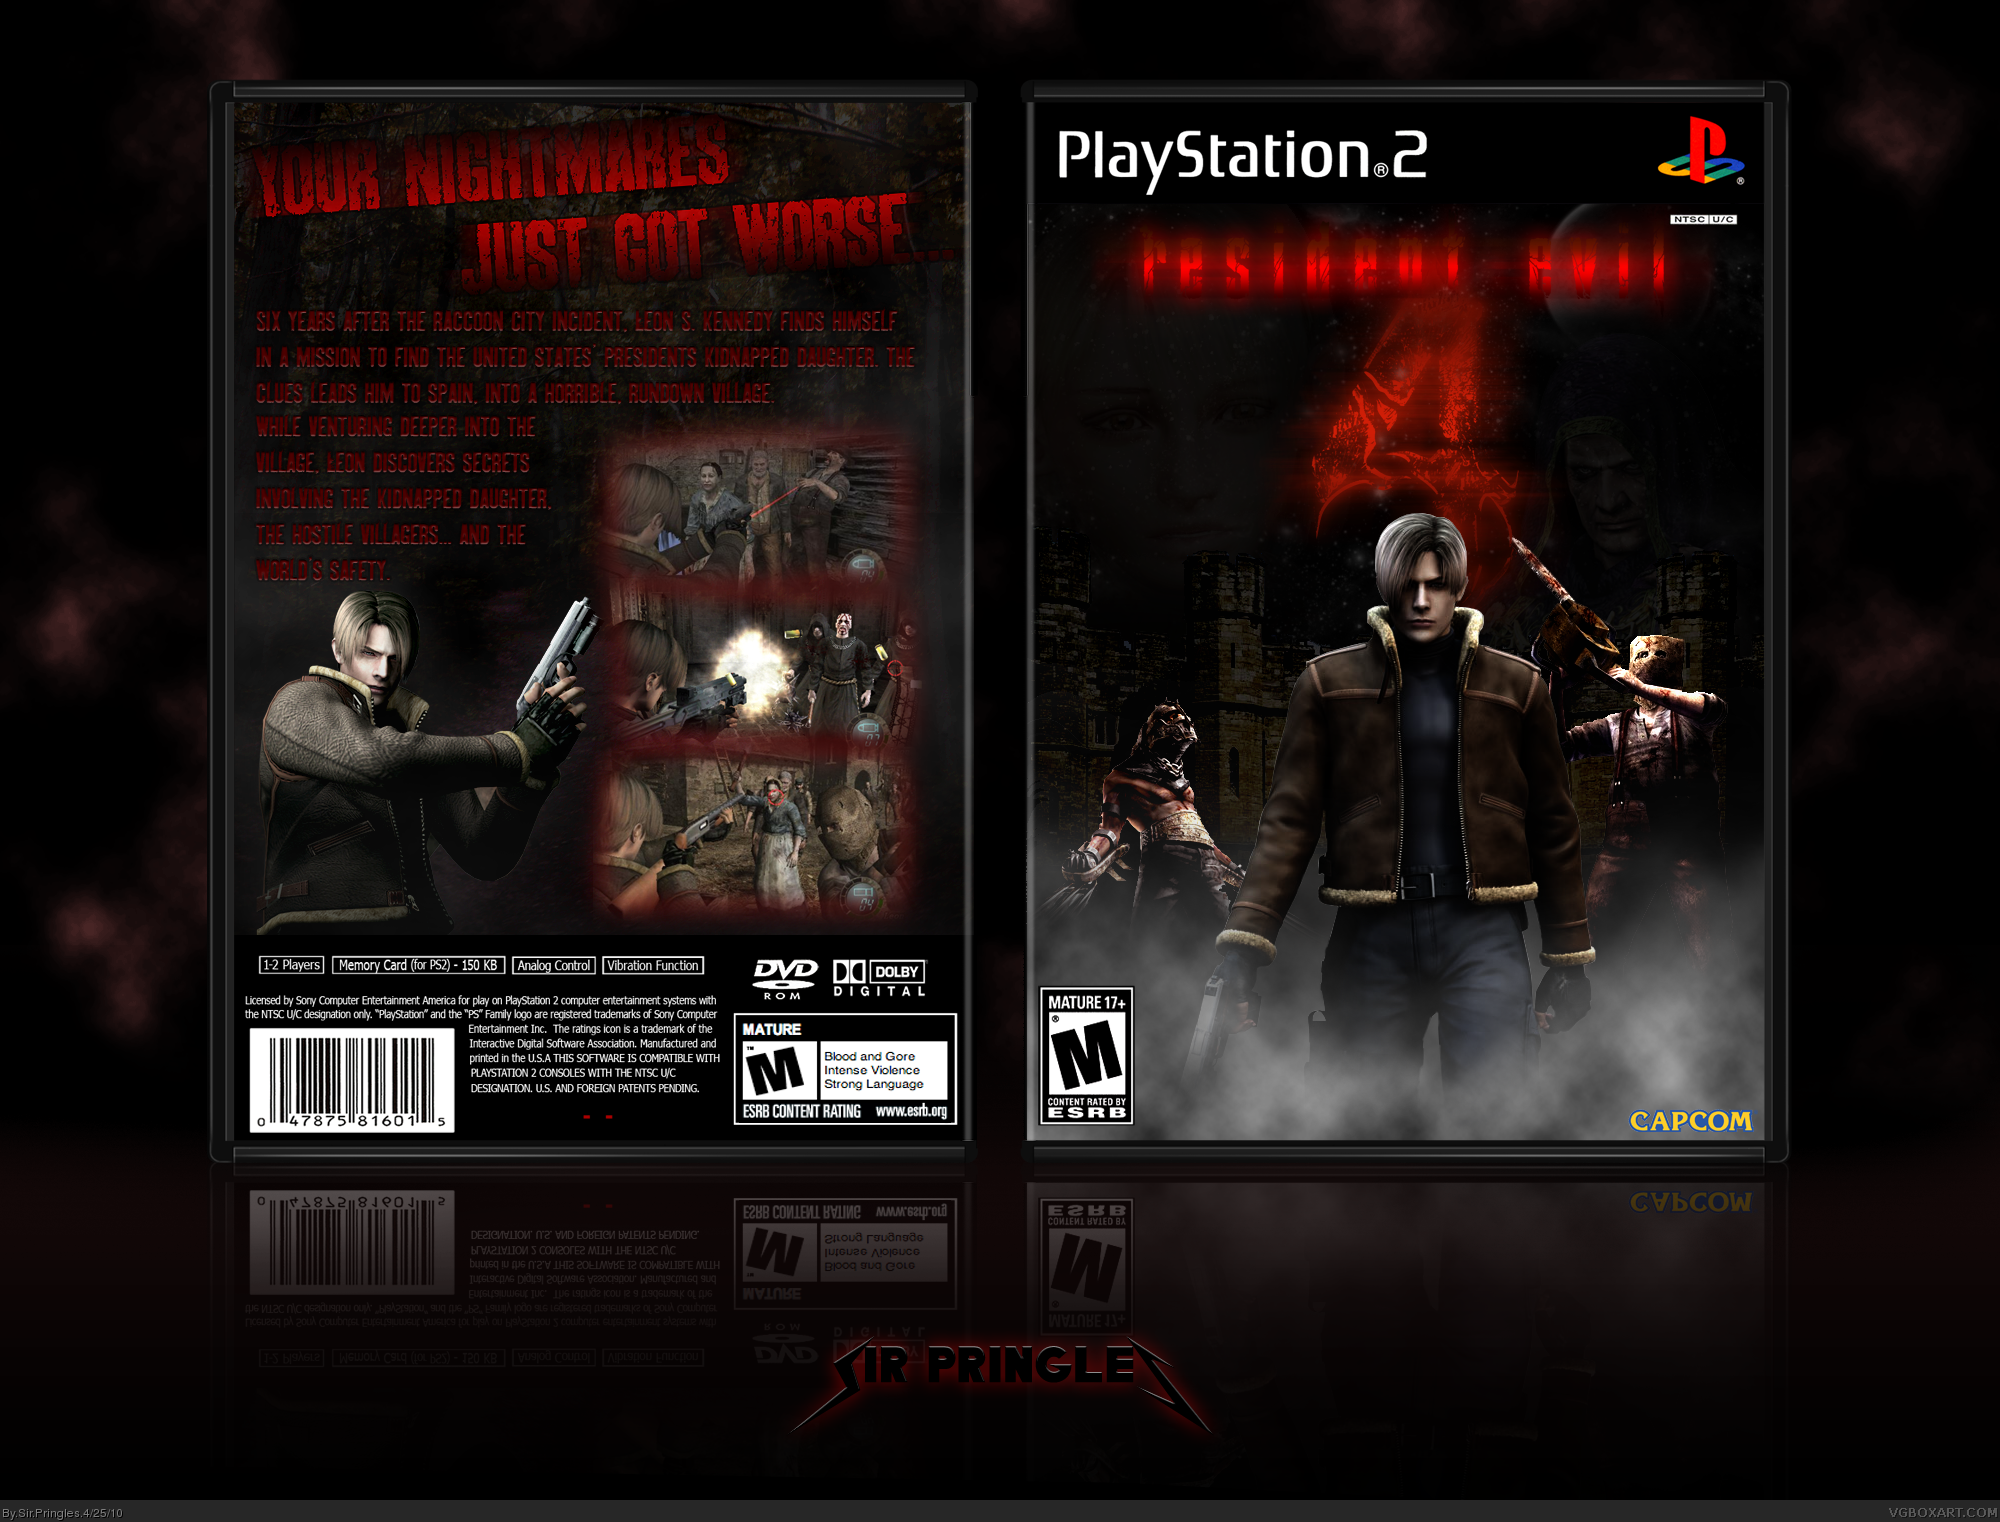 Обложка диска Resident Evil 4 ps2. PLAYSTATION 4 Resident Evil 2. Resident Evil 4 Box. Resident Evil 4 PLAYSTATION 2 обложка. Resident evil пс 2